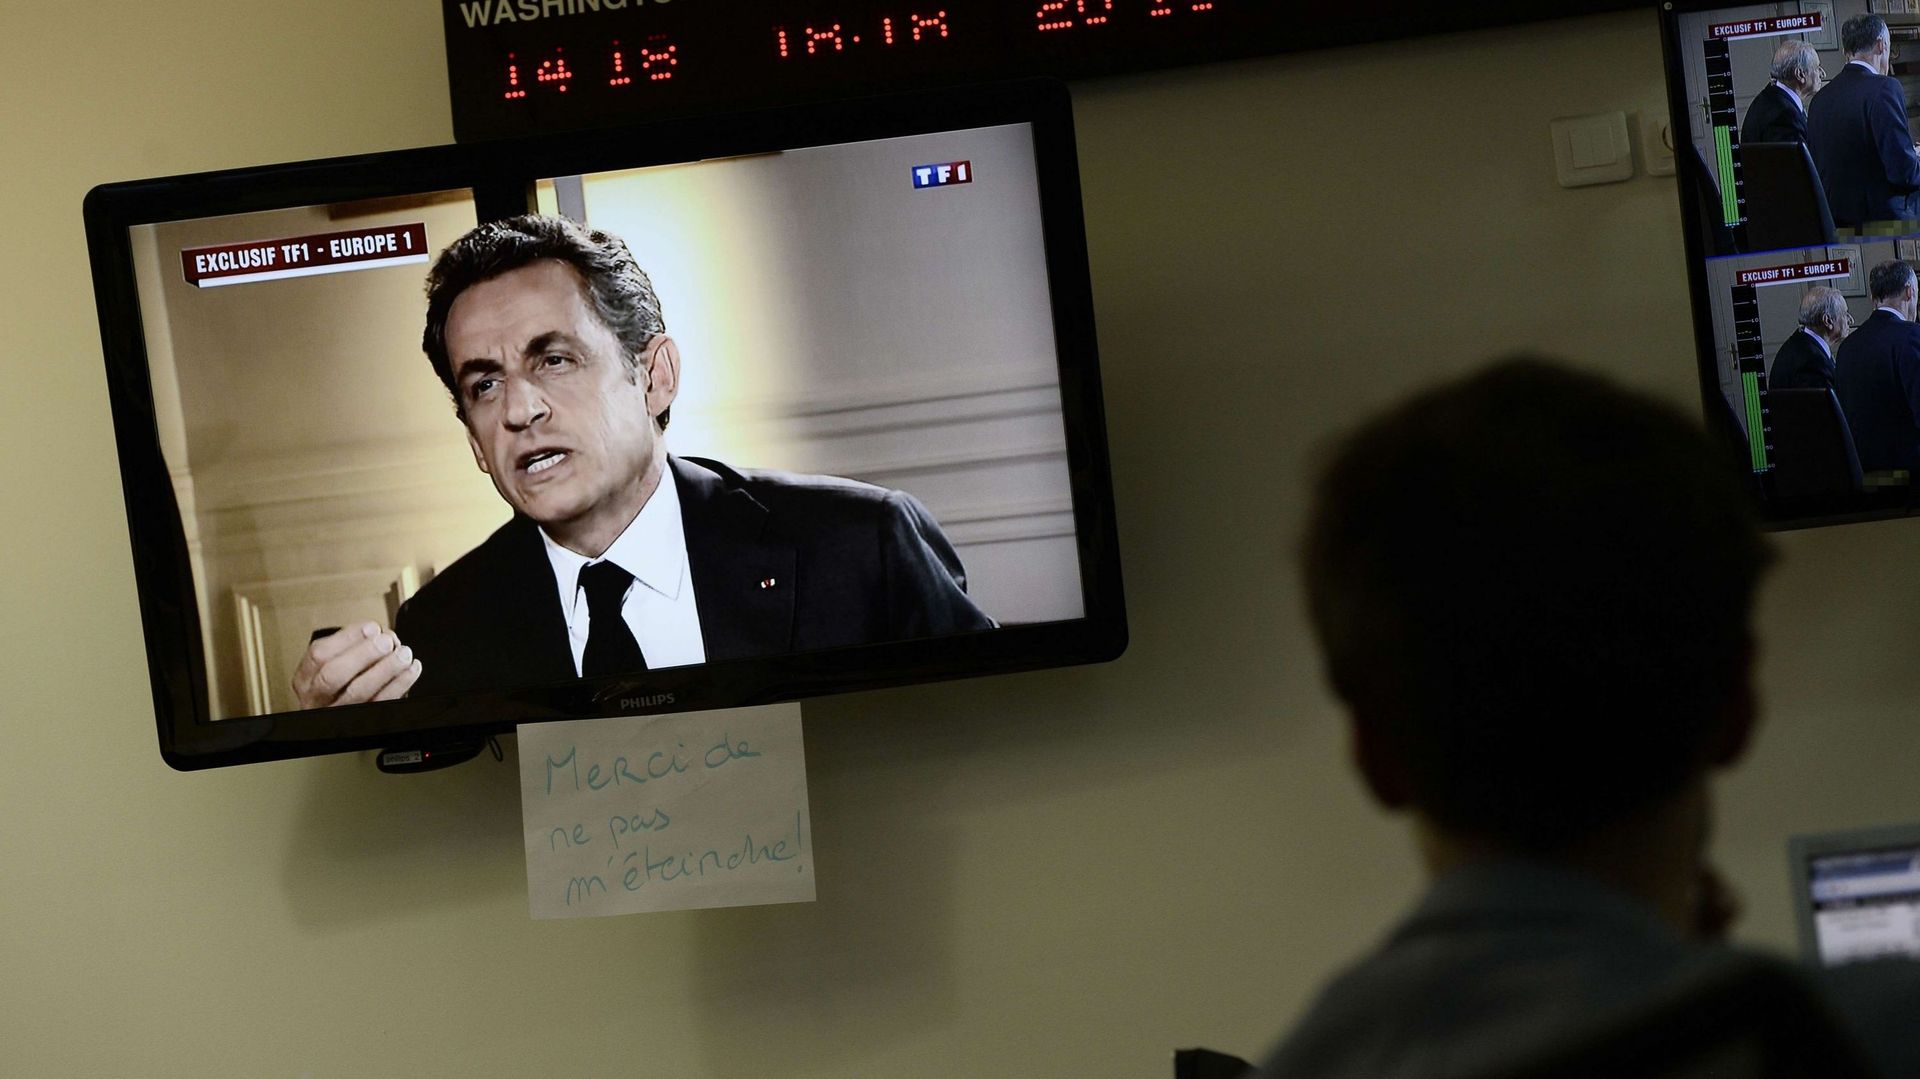 L'interview de Sarkozy, "un exercice réussi" malgré un contexte de crise